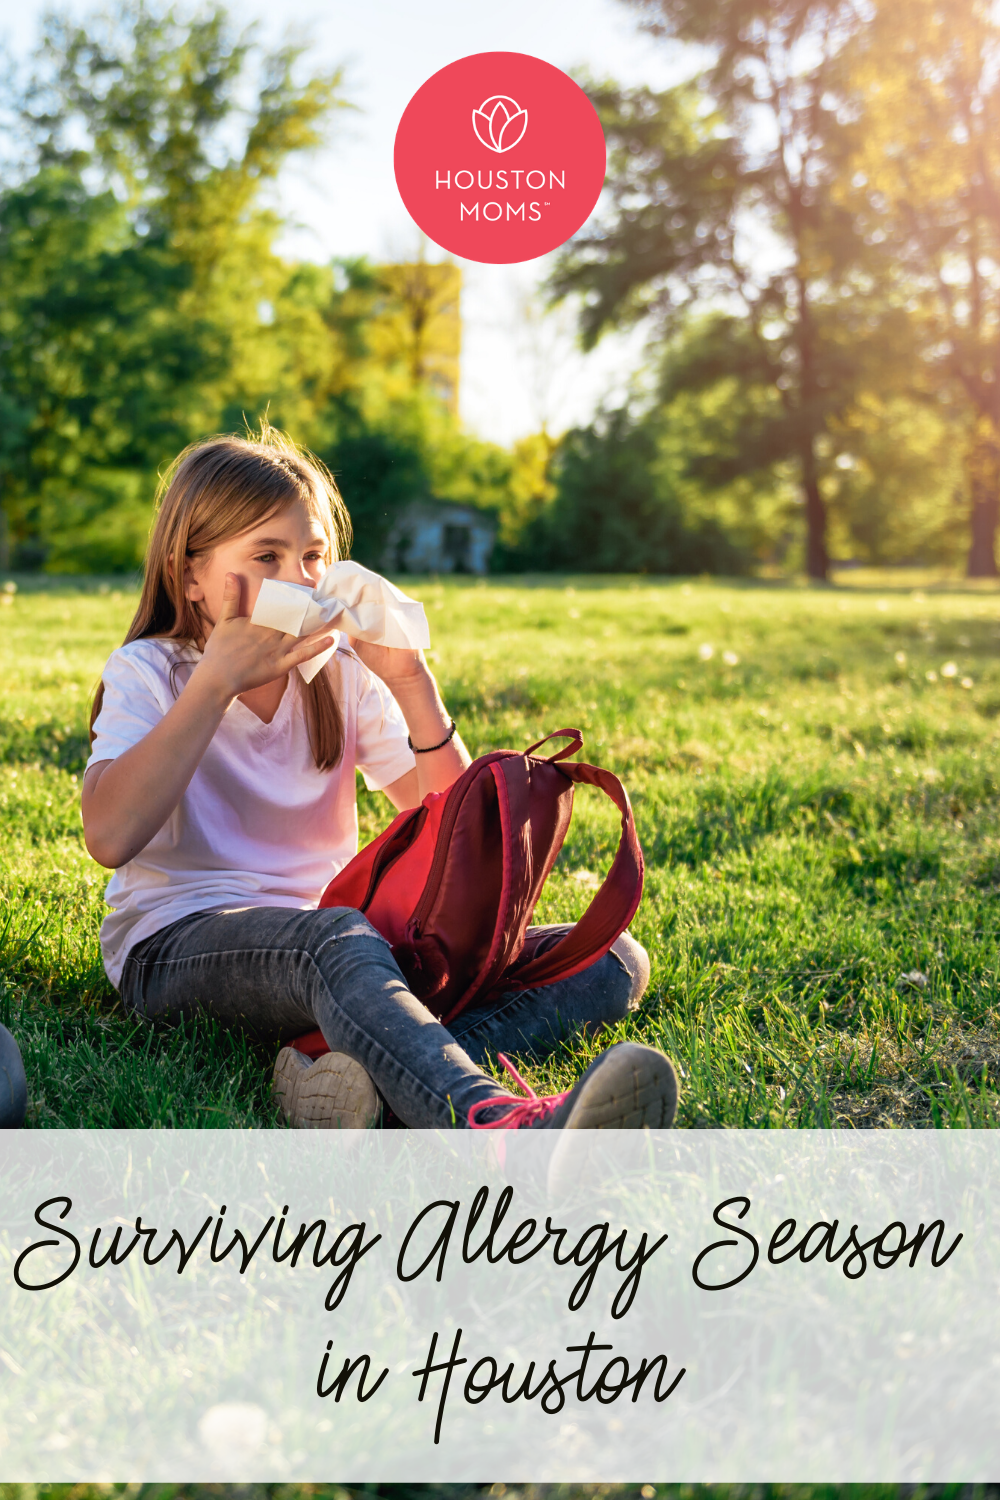 Houston Moms "Surviving Allergy Season in Houston" #houstonmoms #houstonmomsblog #momsaroundhouston